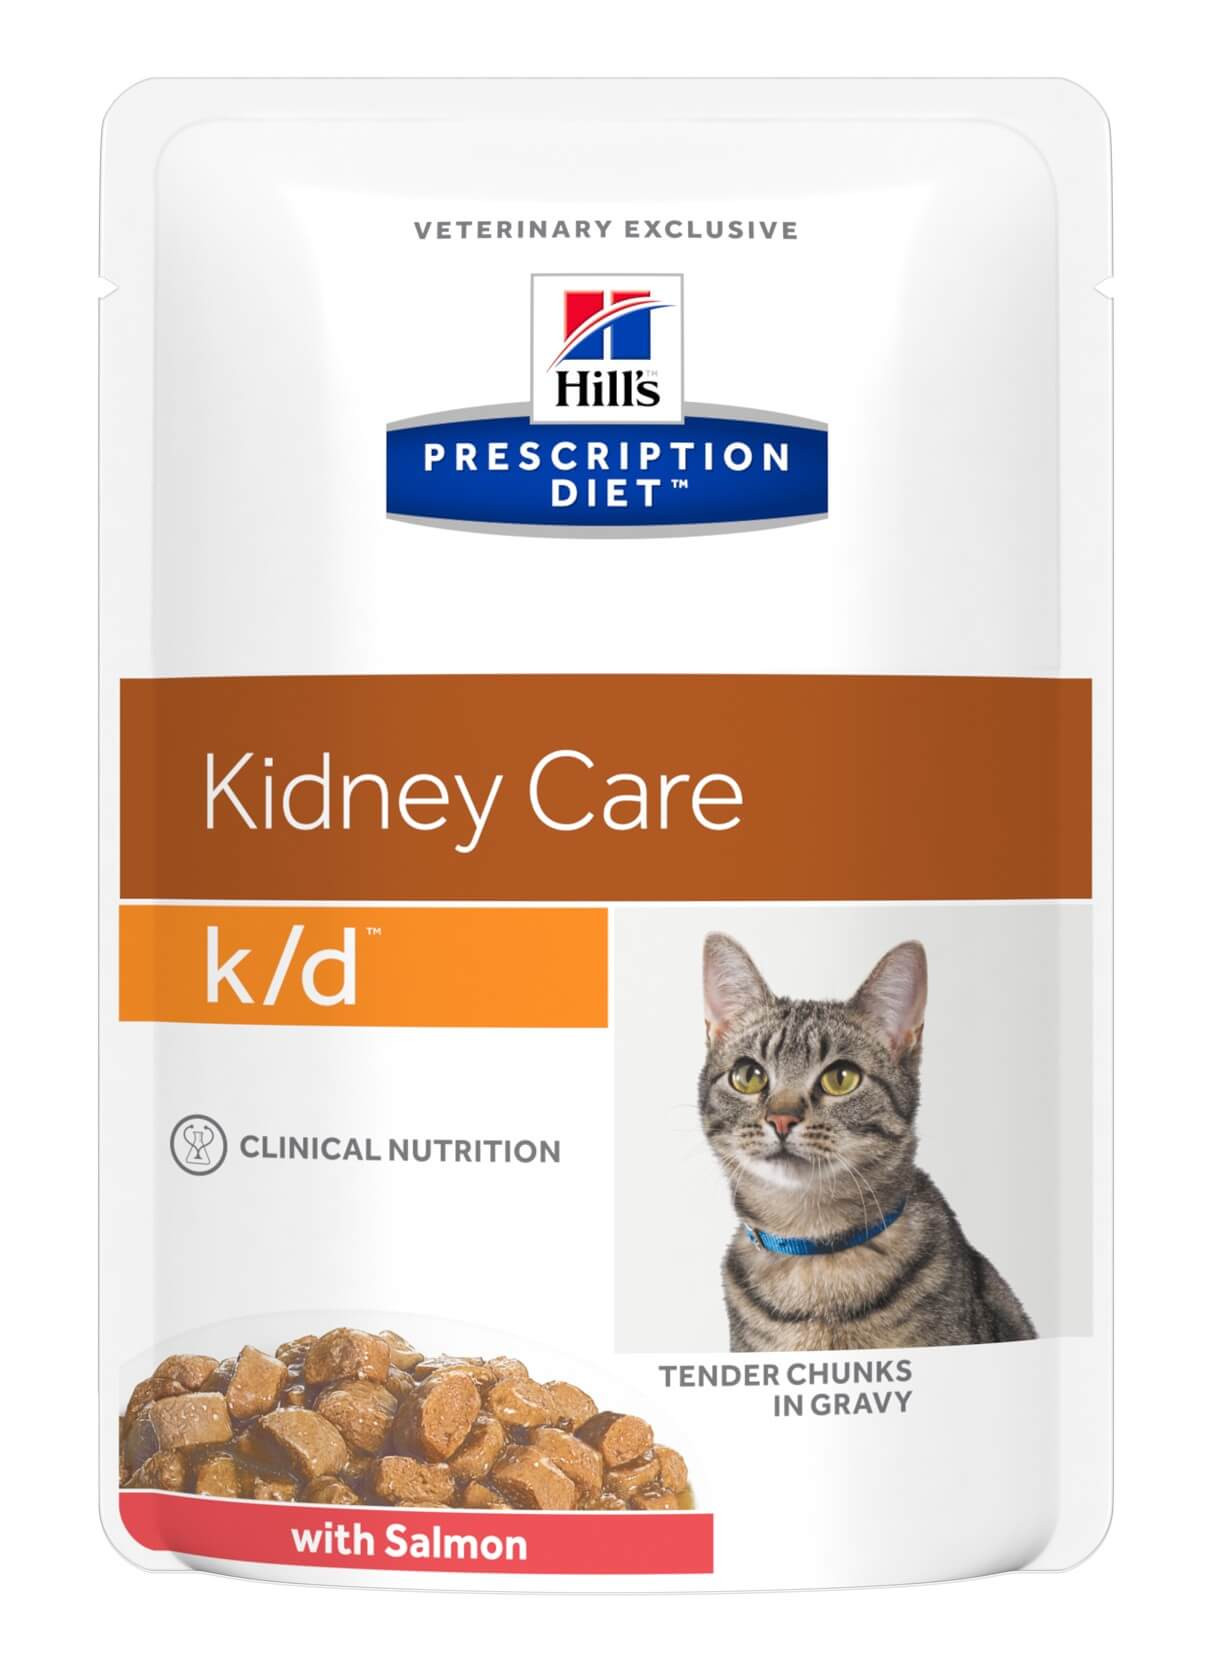 Hill's Prescription K/D Kidney Care kattenvoer met zalm 85 g zakje